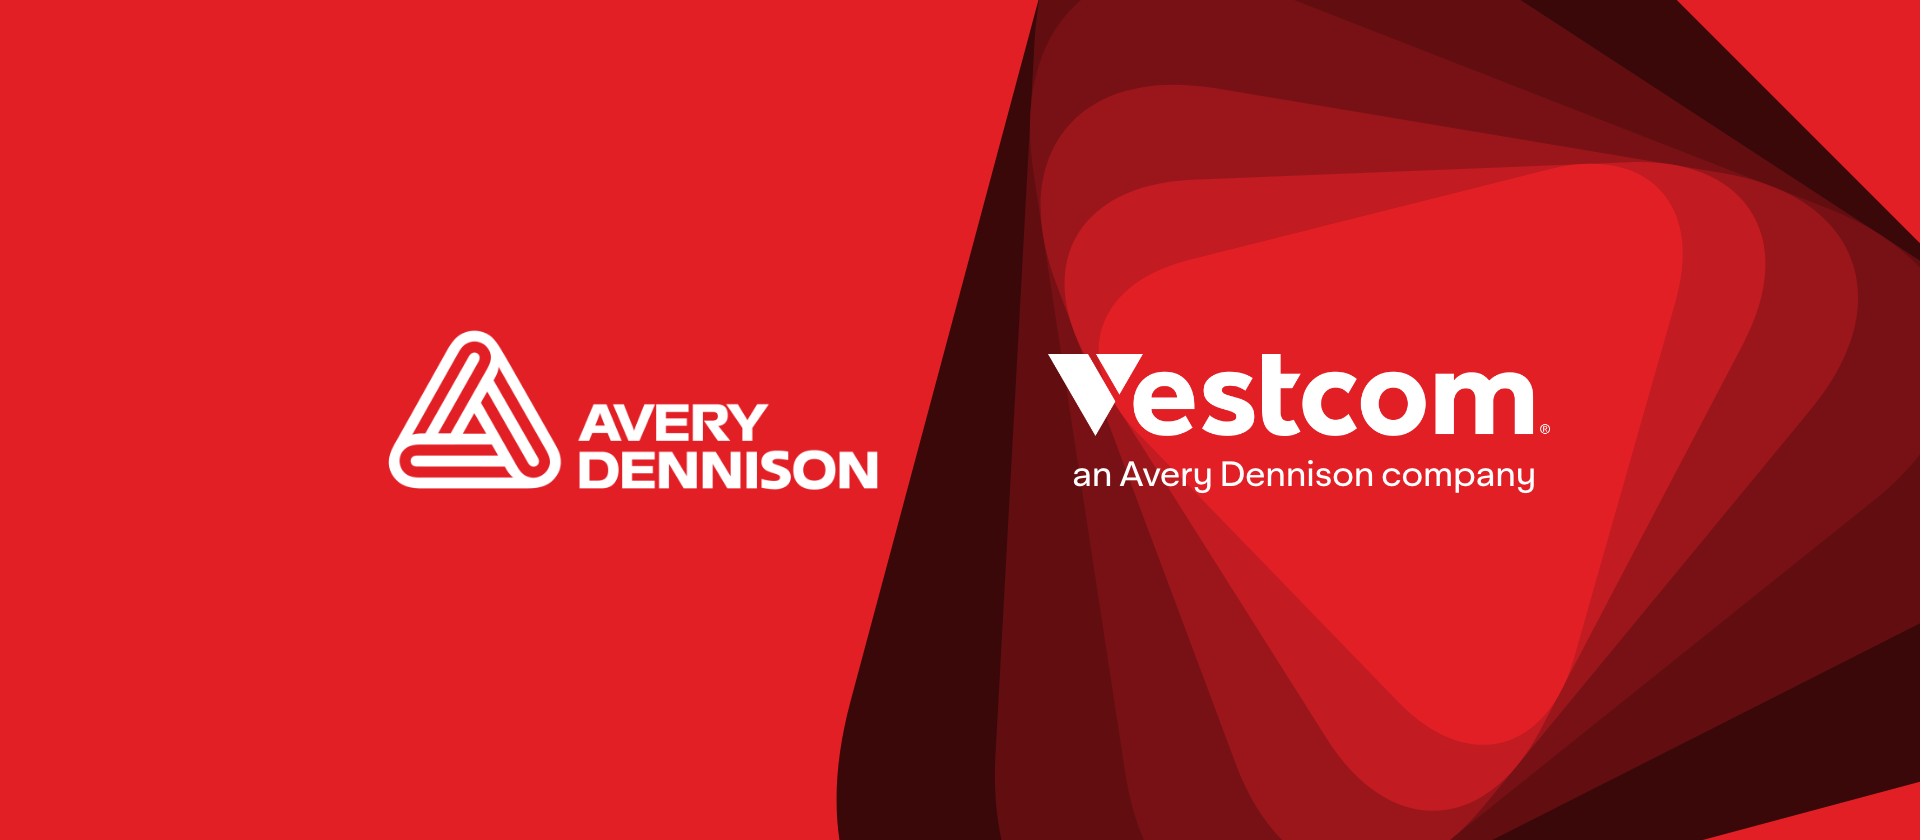 Avery Dennison Completes Acquisition of Vestcom